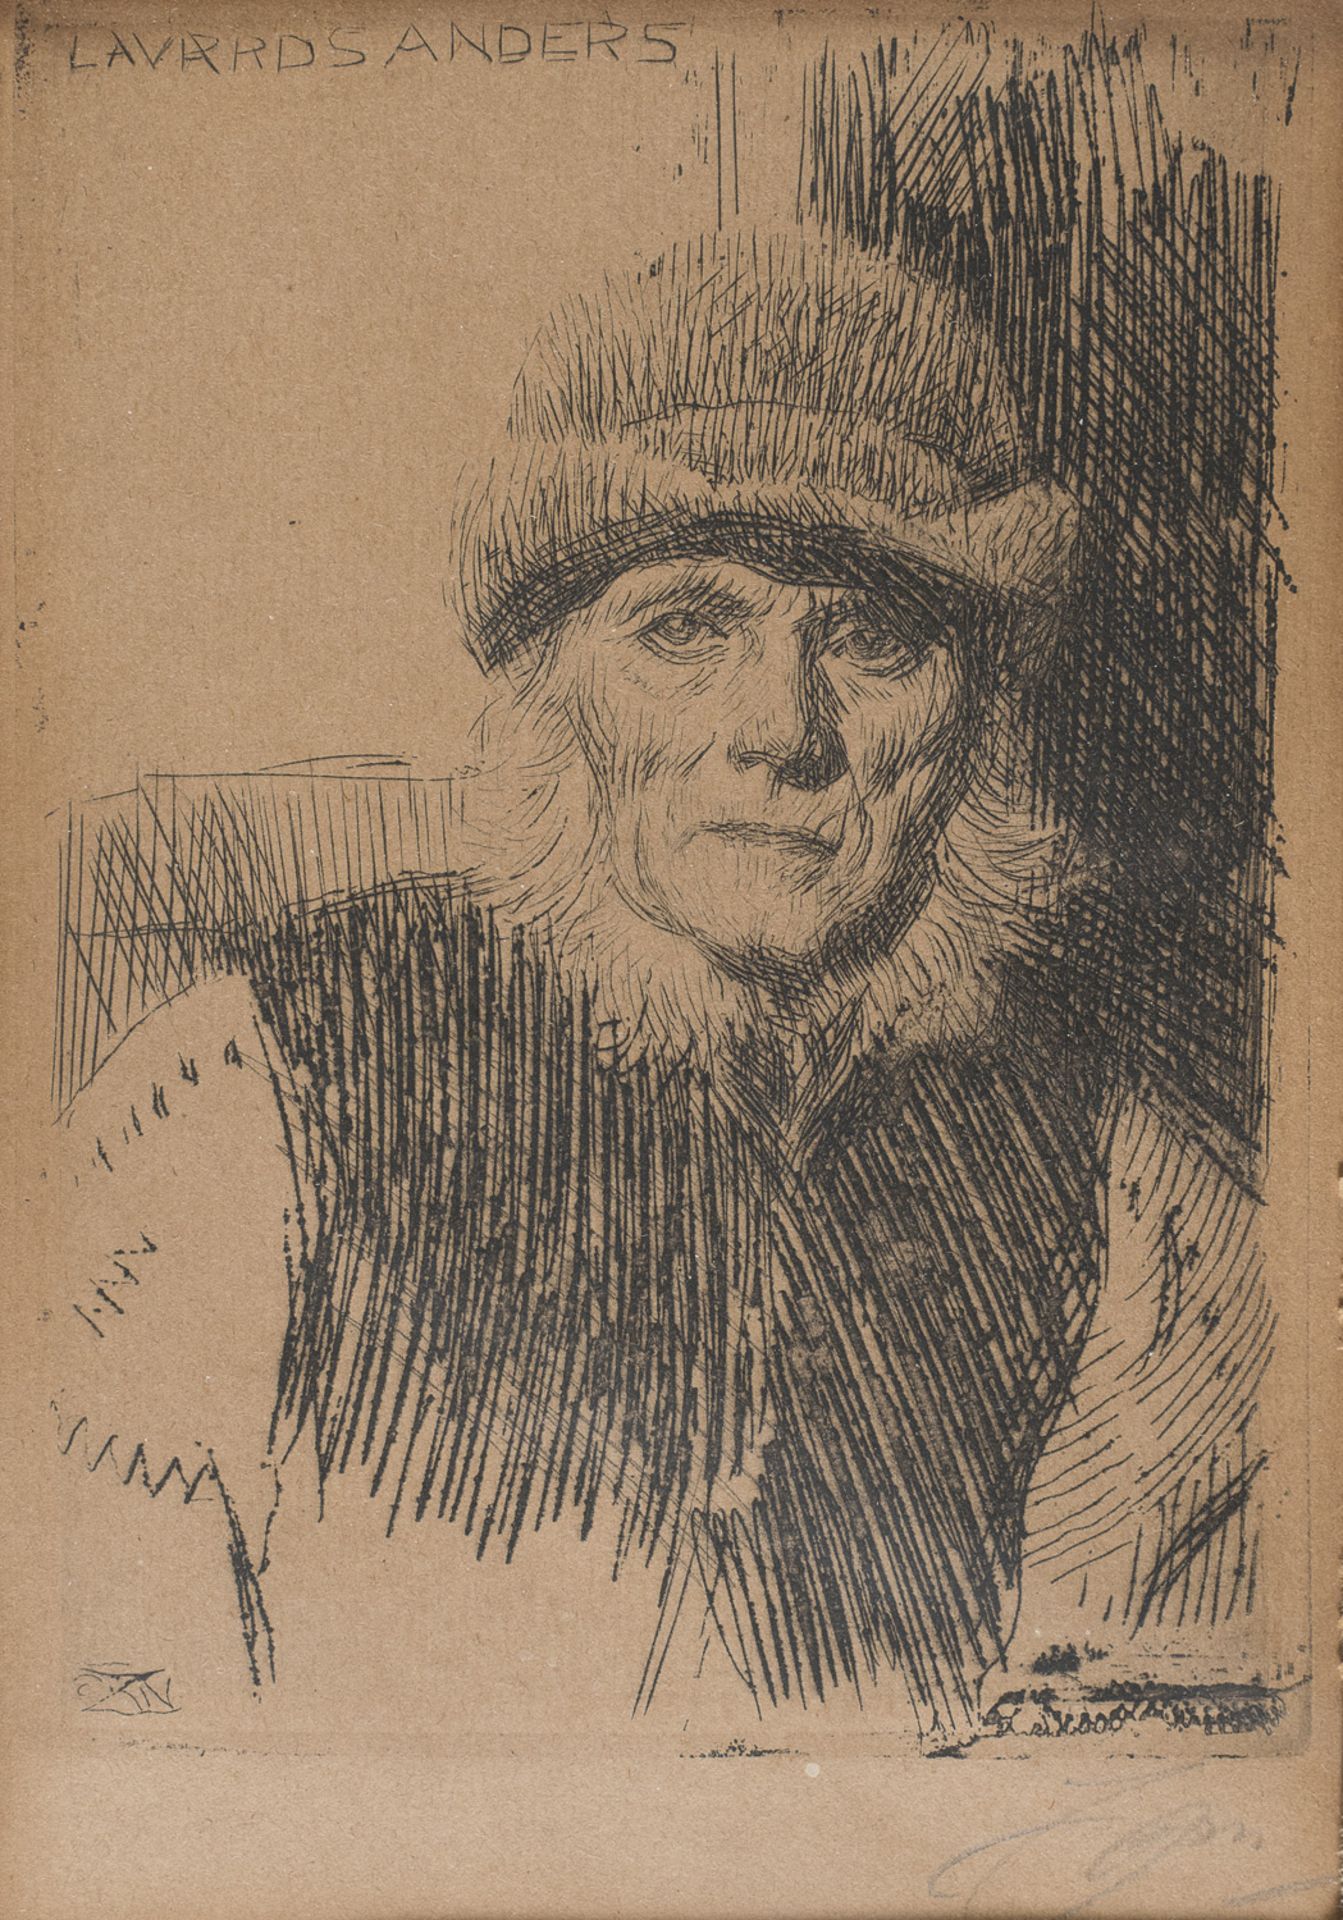 PORTRAIT ENGRAVING BY ANDERS LEONARD ZORN (1860-1920)